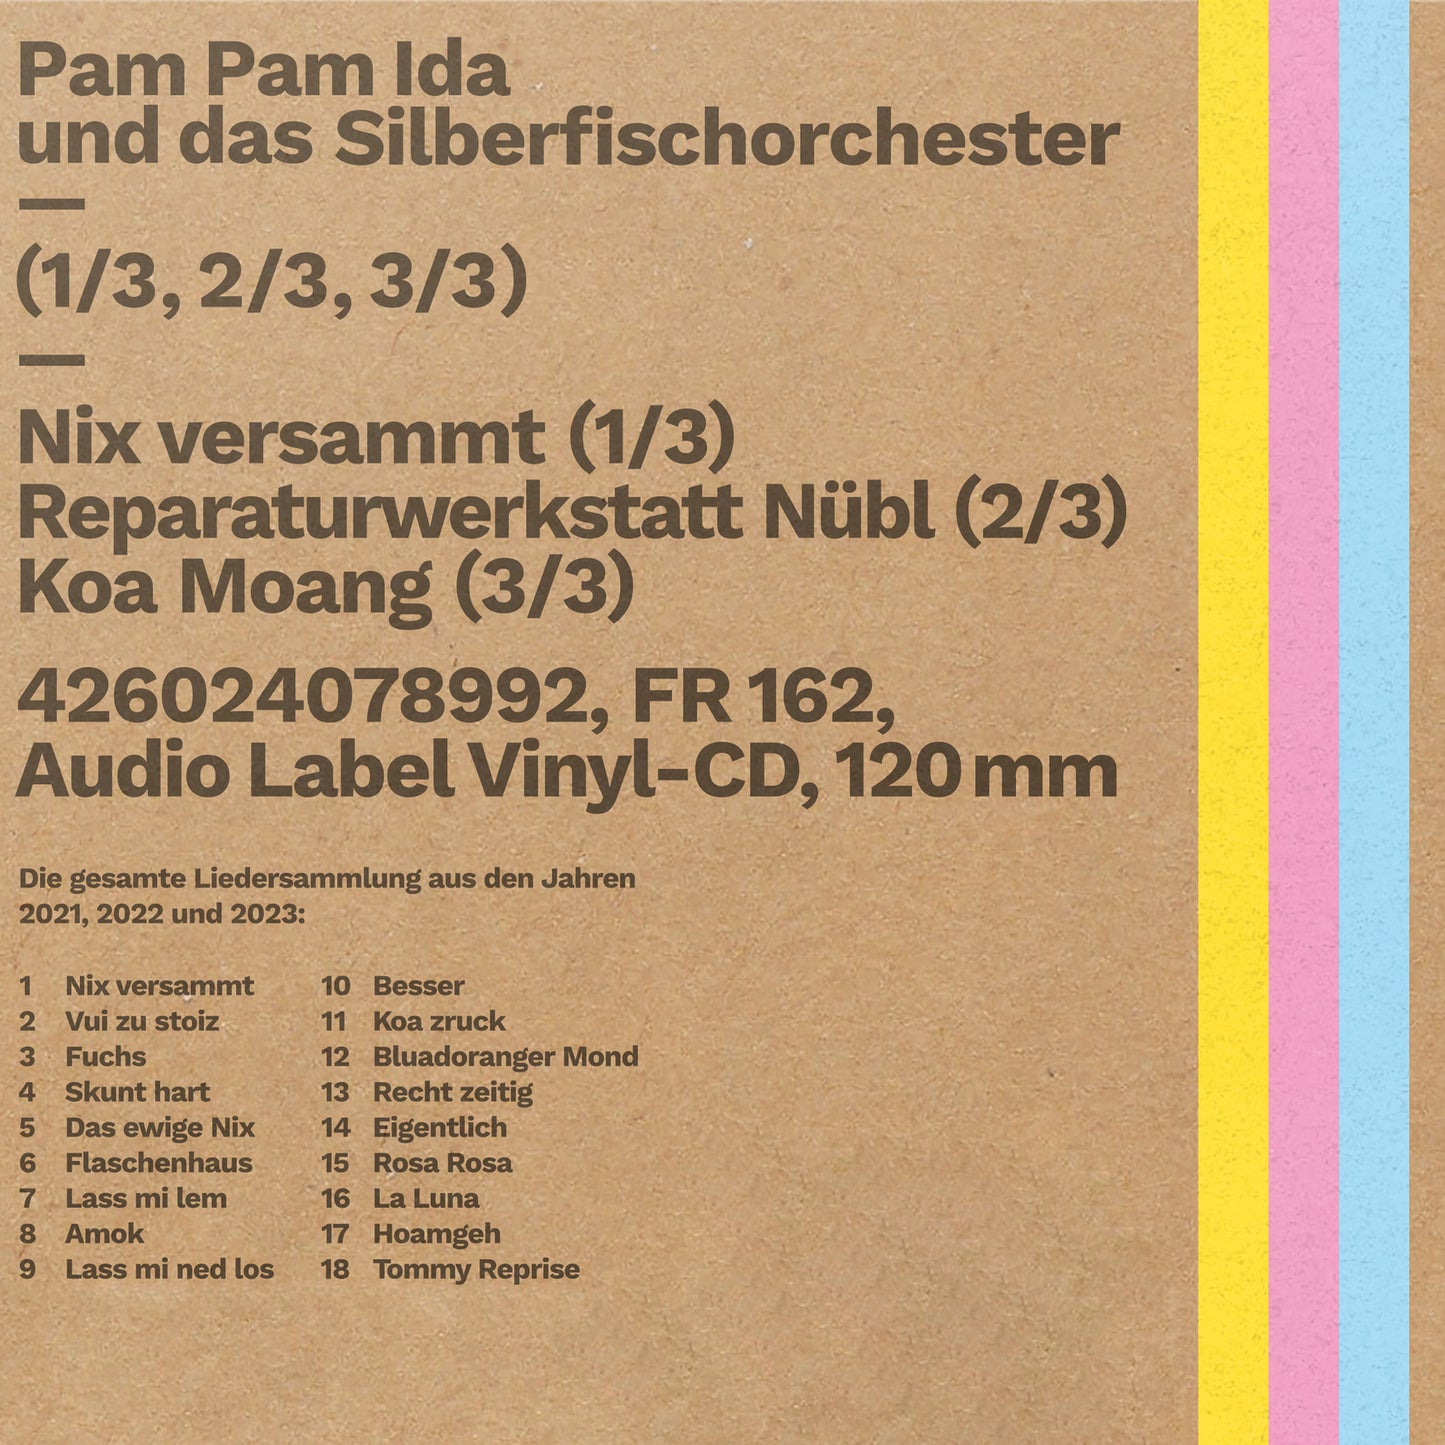 PAM PAM IDA - Trilogie CD